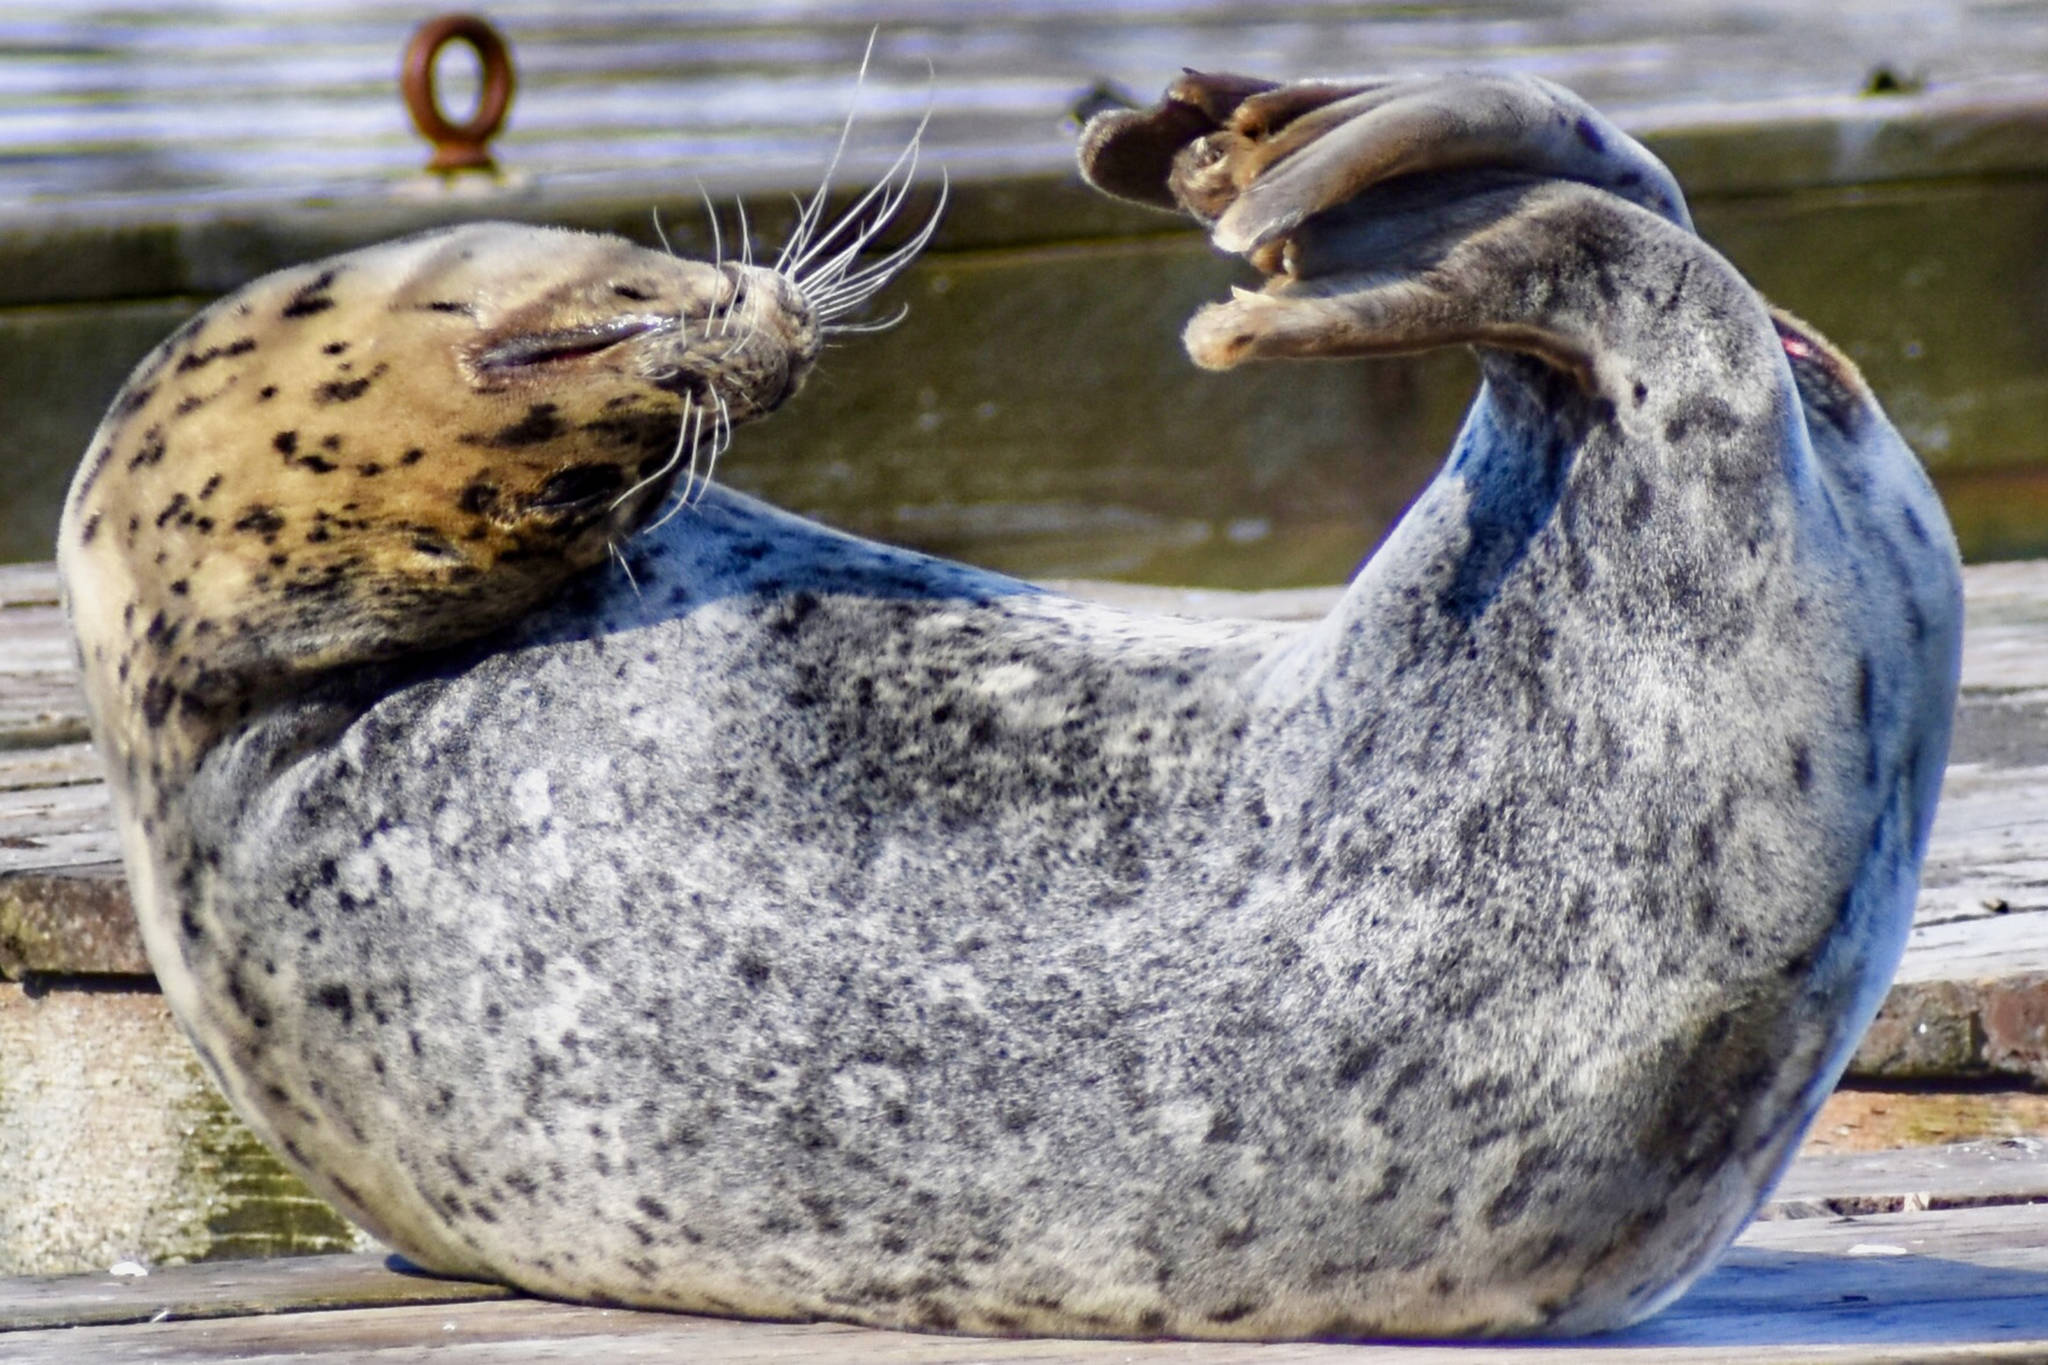 A seal contorts into a yoga-like pose. (Courtesy Photo / Virginia Kelly)